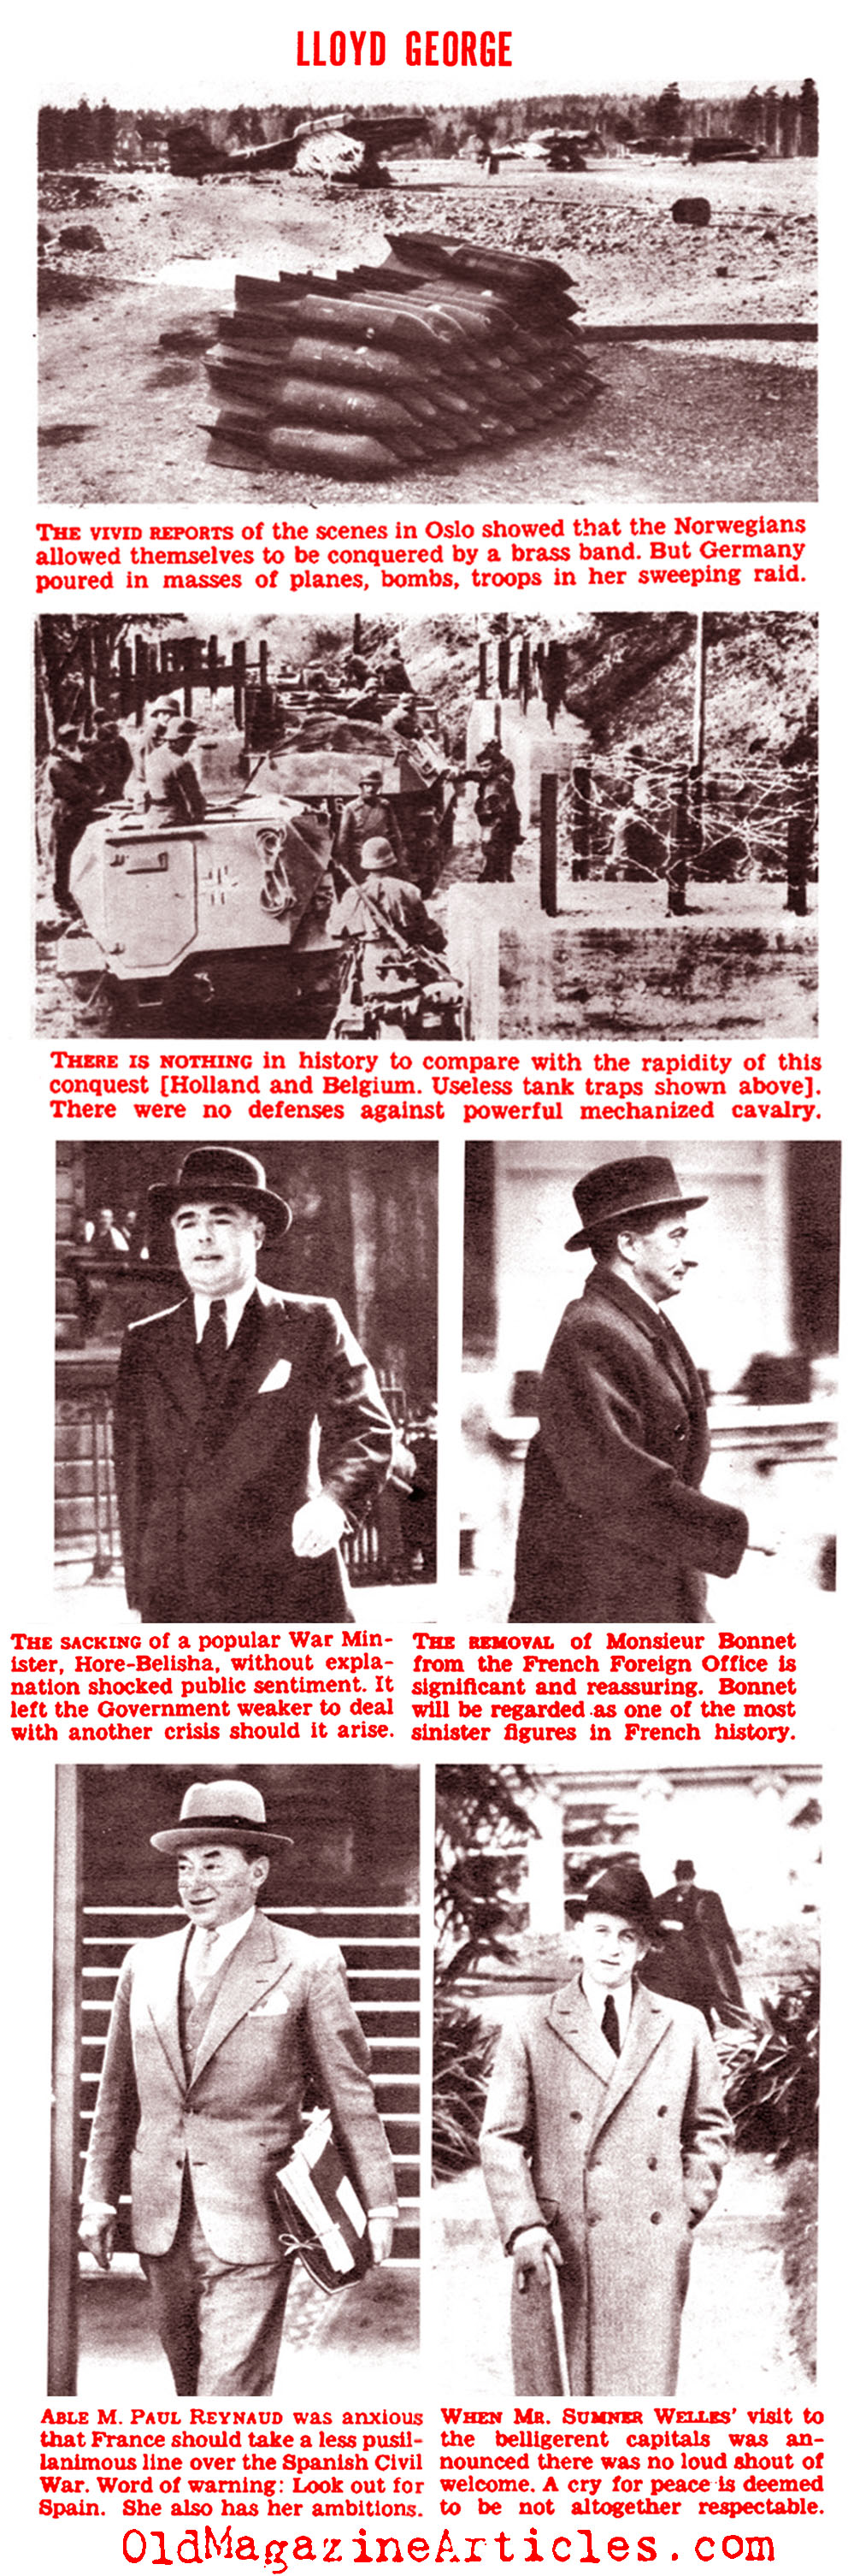 Lloyd George on the Nazi Blitzkrieg (Click Magazine, 1940)